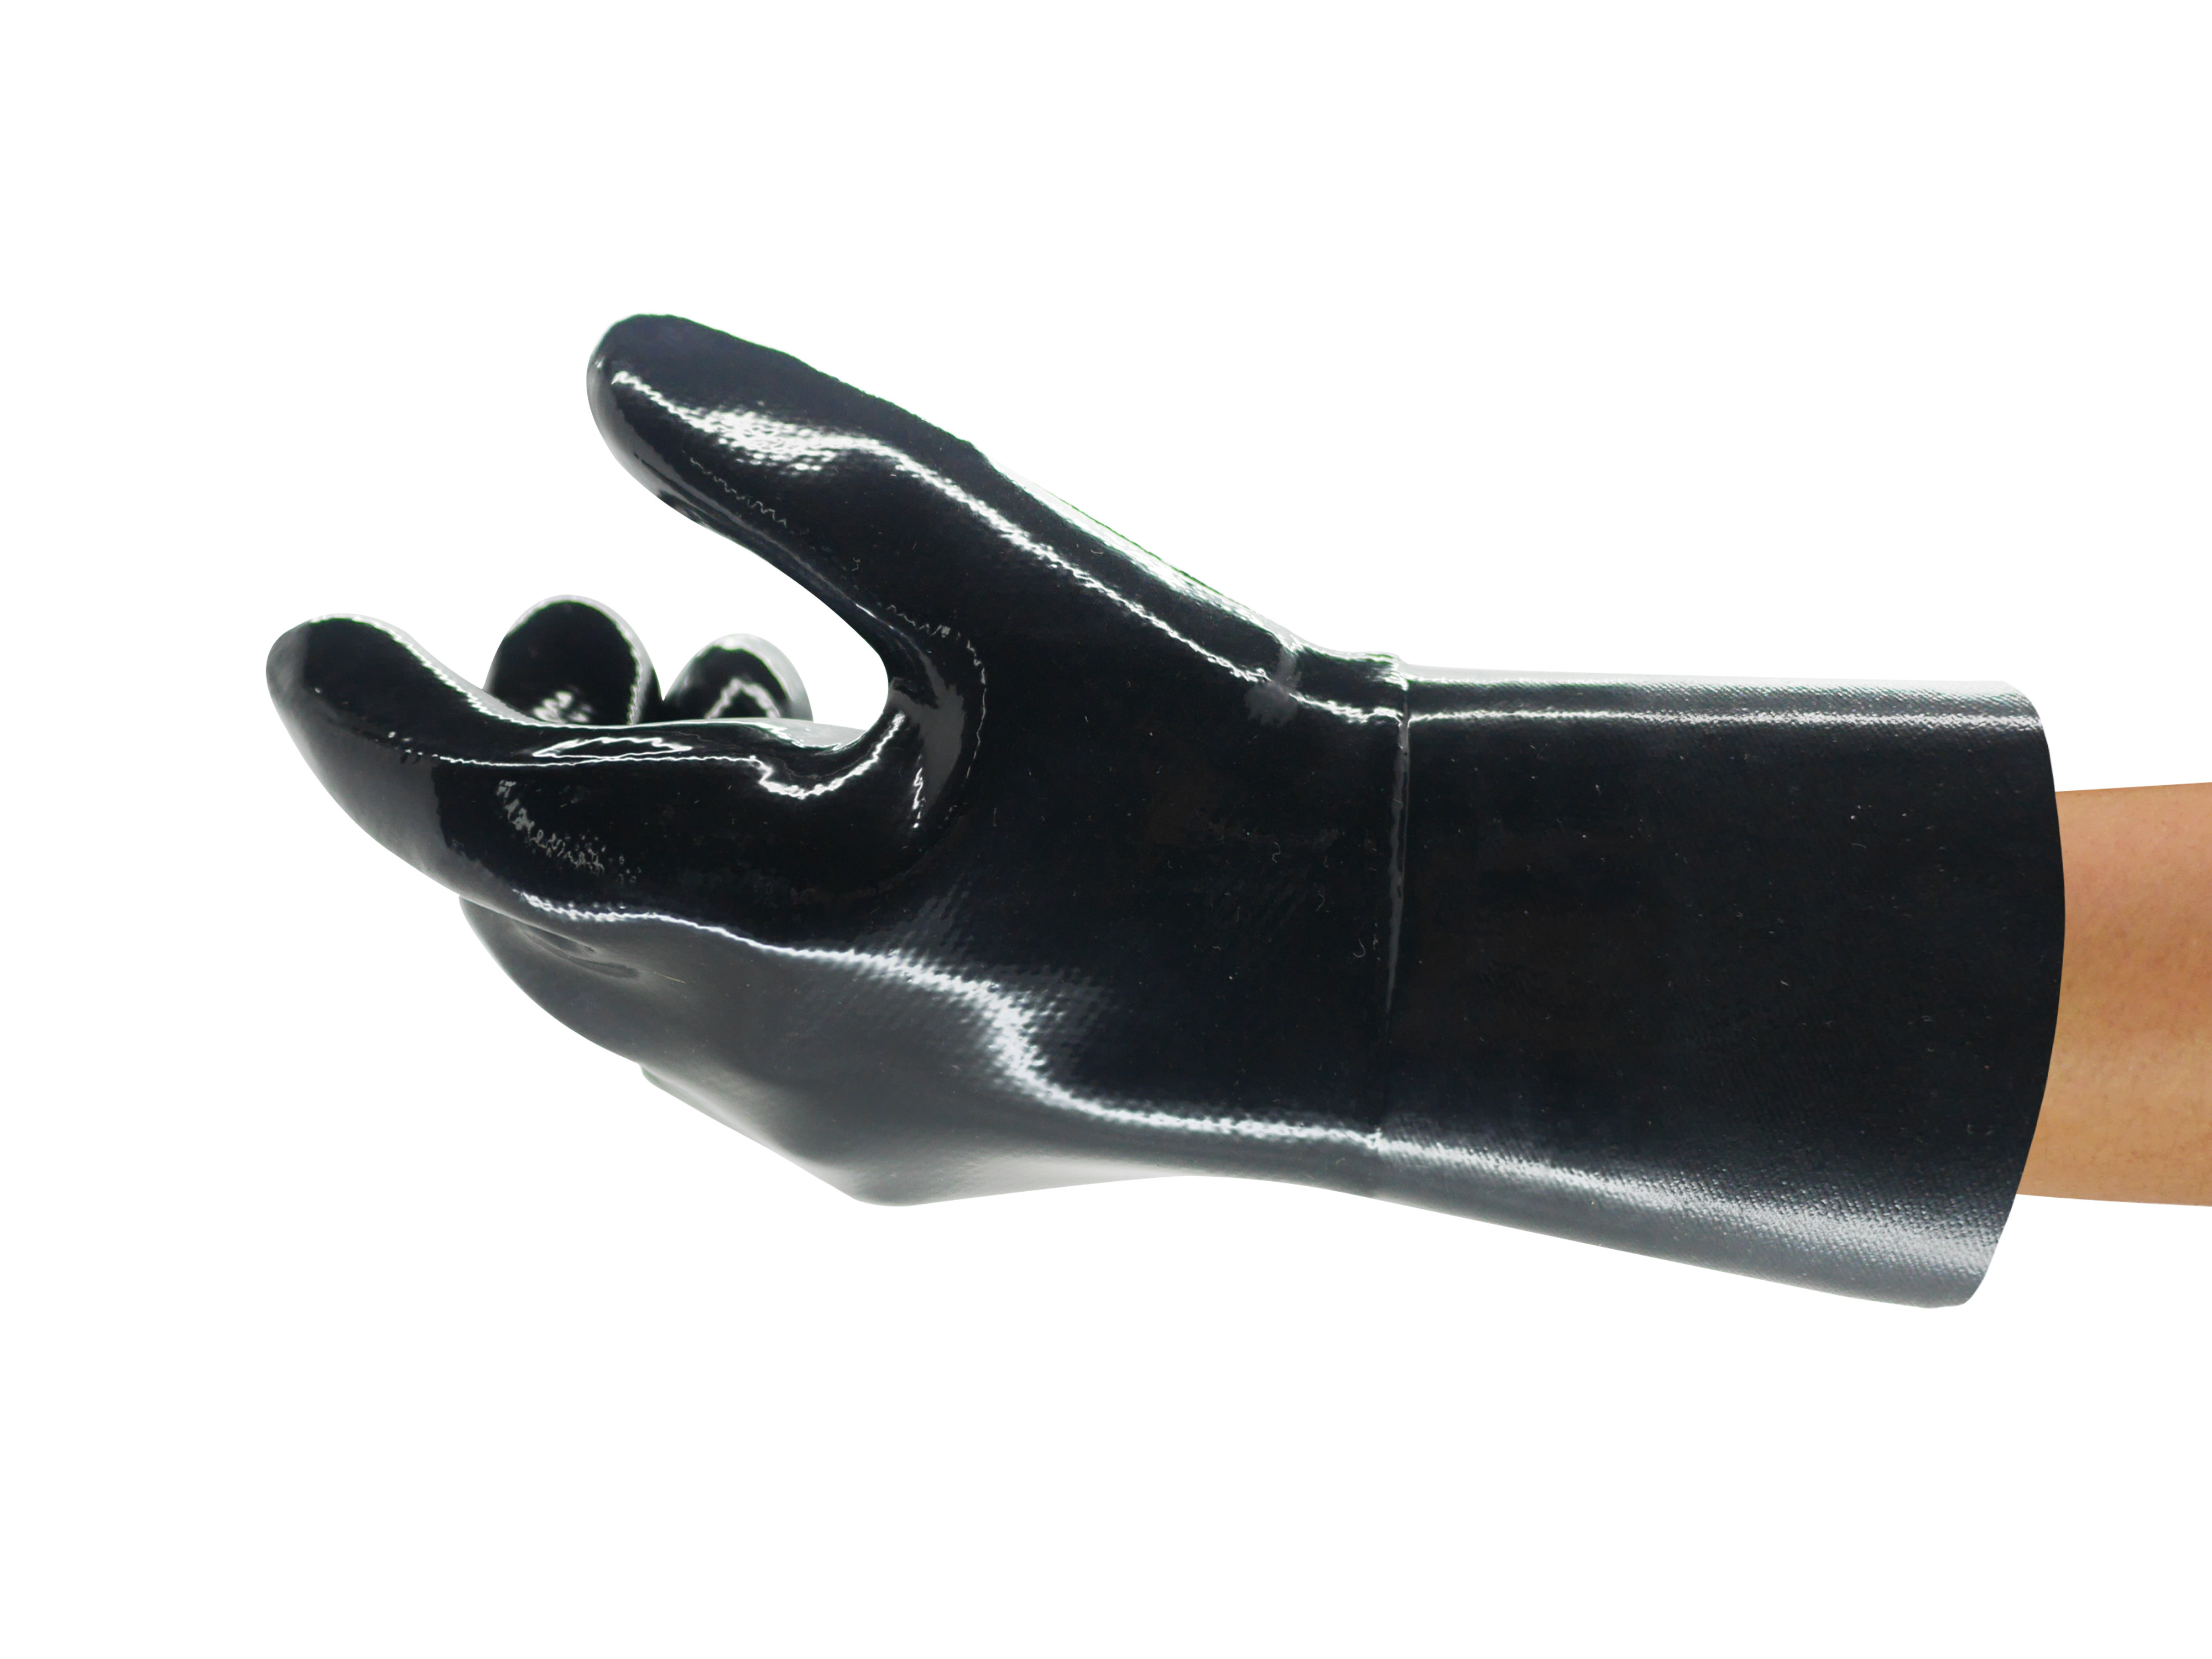 Ansell Handschuh Scorpio® 09-022 Gr. 10 (AlphaTec)